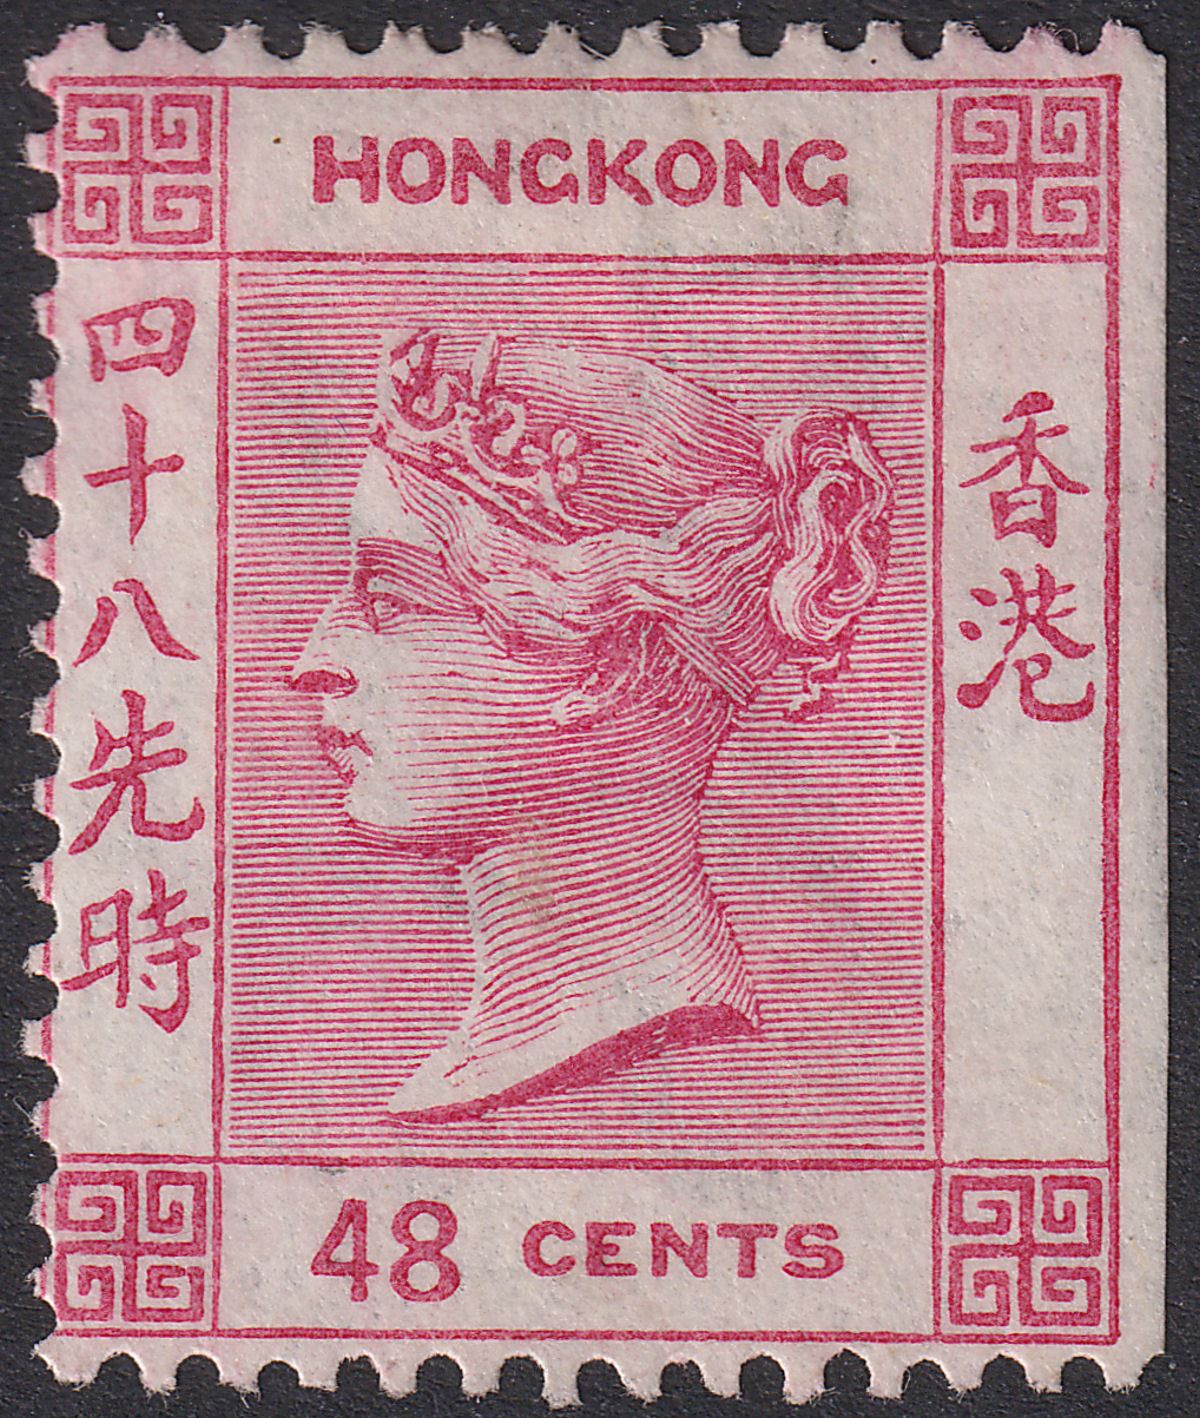 Hong Kong 1865 QV 48c Rose-Carmine Unused SG17a cat £950 as mint